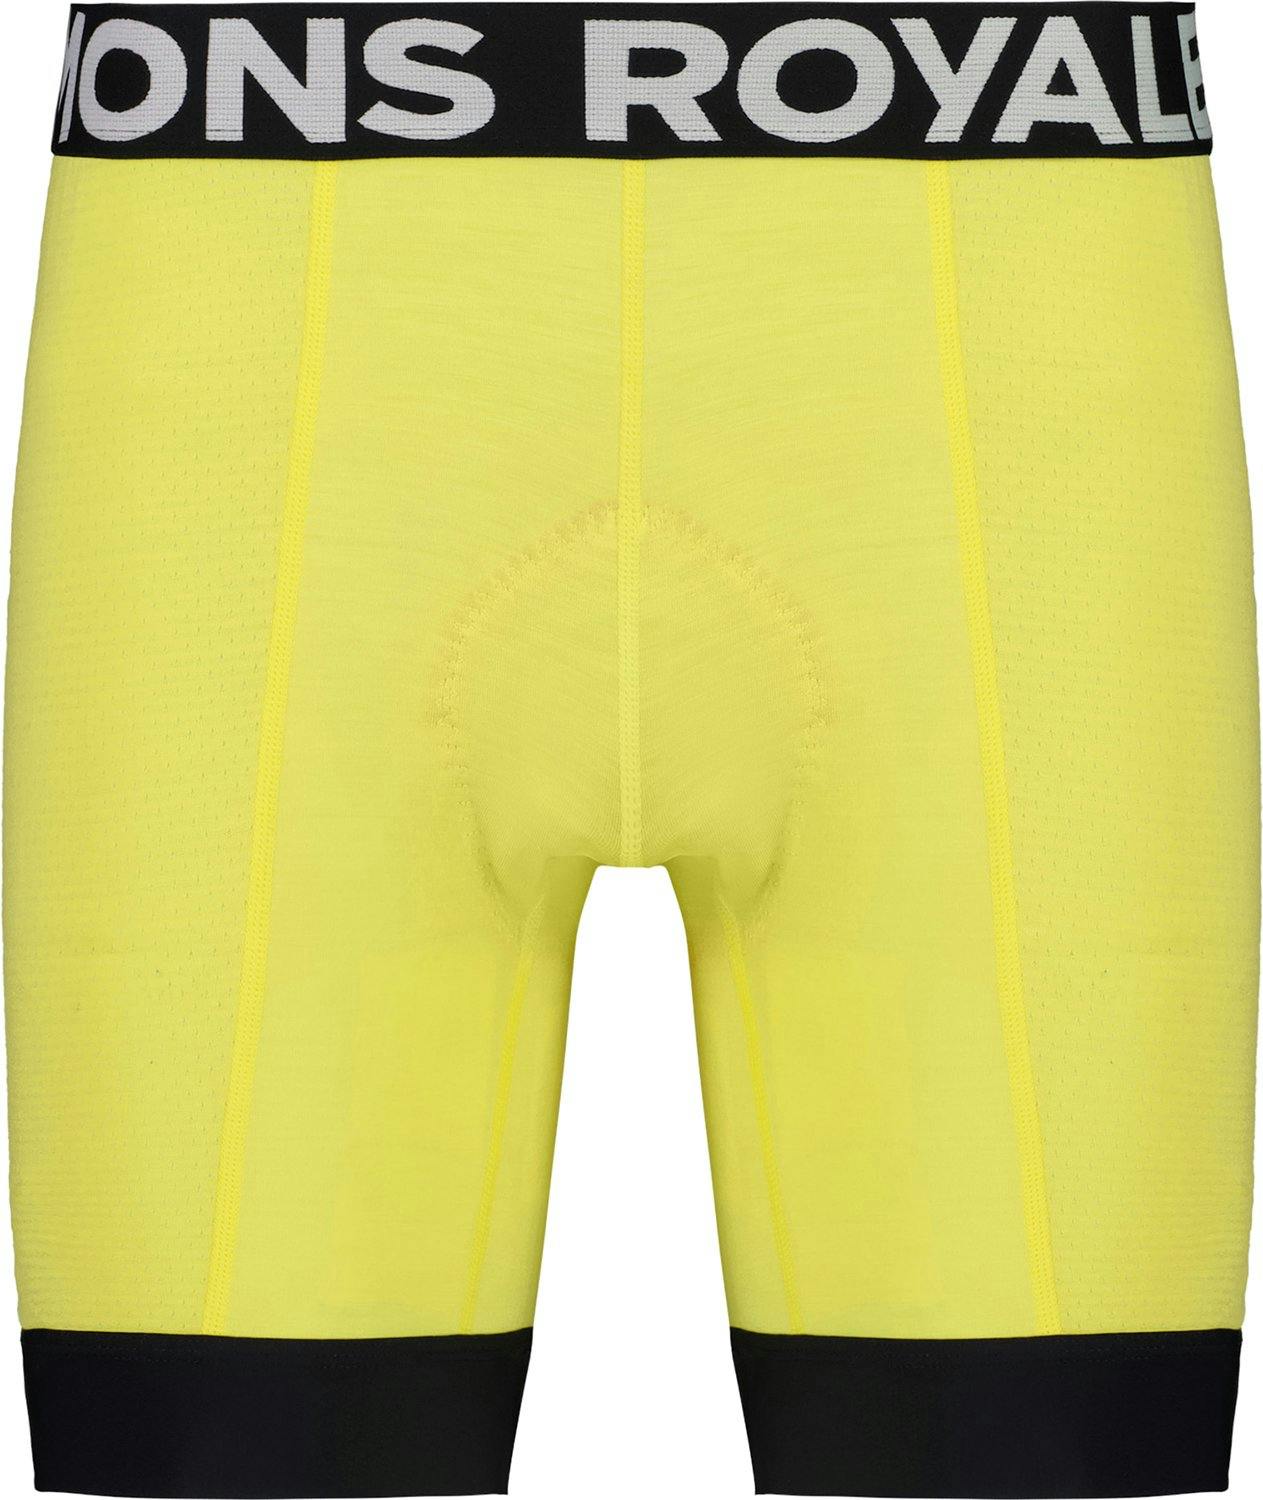 Product image for Epic Merino Shift Bike Shorts Liner - Women's